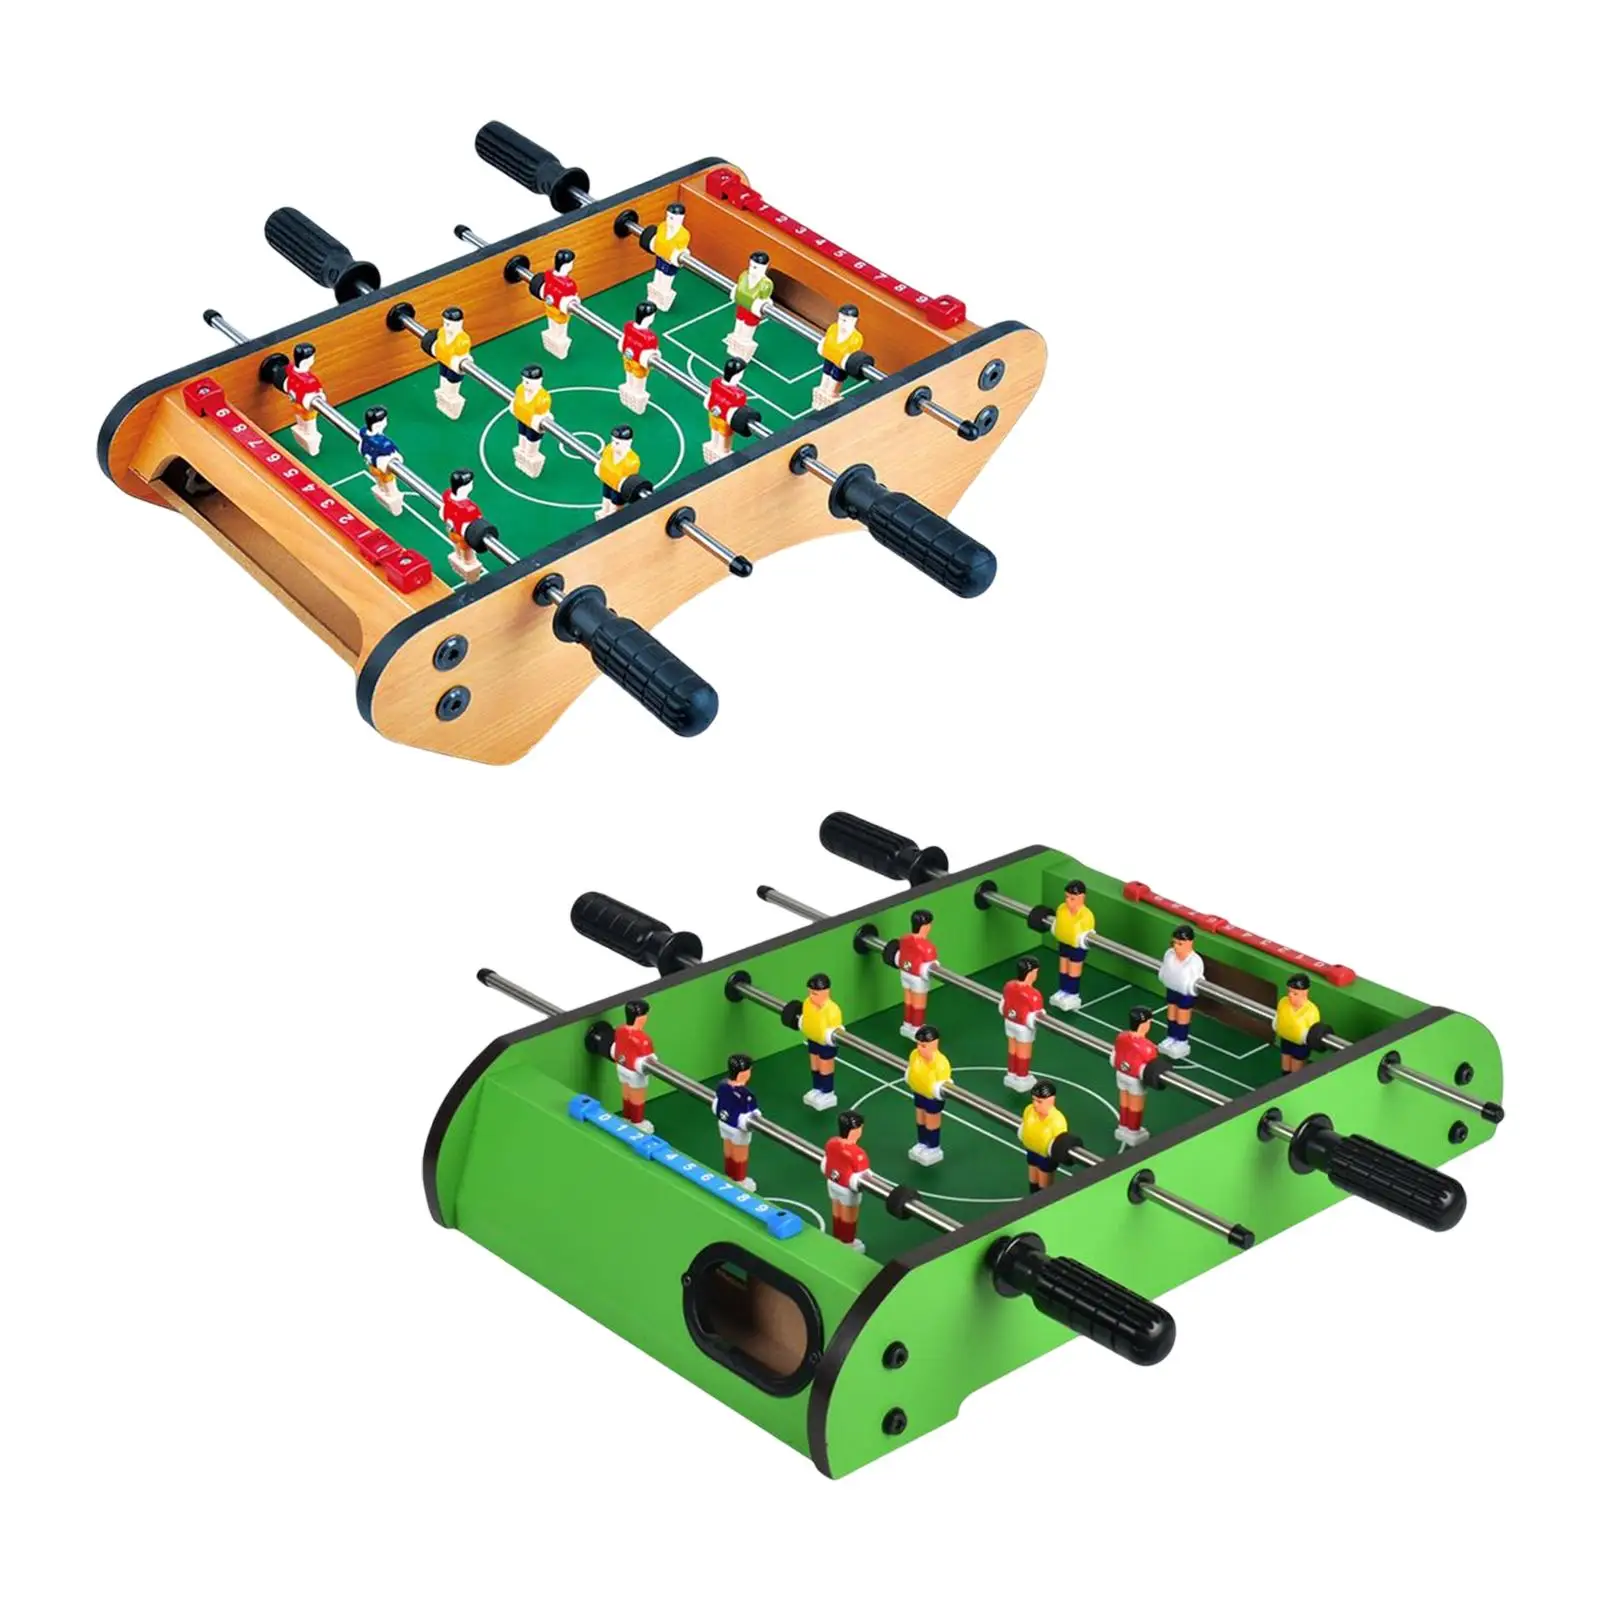 Wooden Tabletop Football Soccer Pinball Games Interesting DIY Pinball Games Hands Desktop Game for Indoor Party Boys